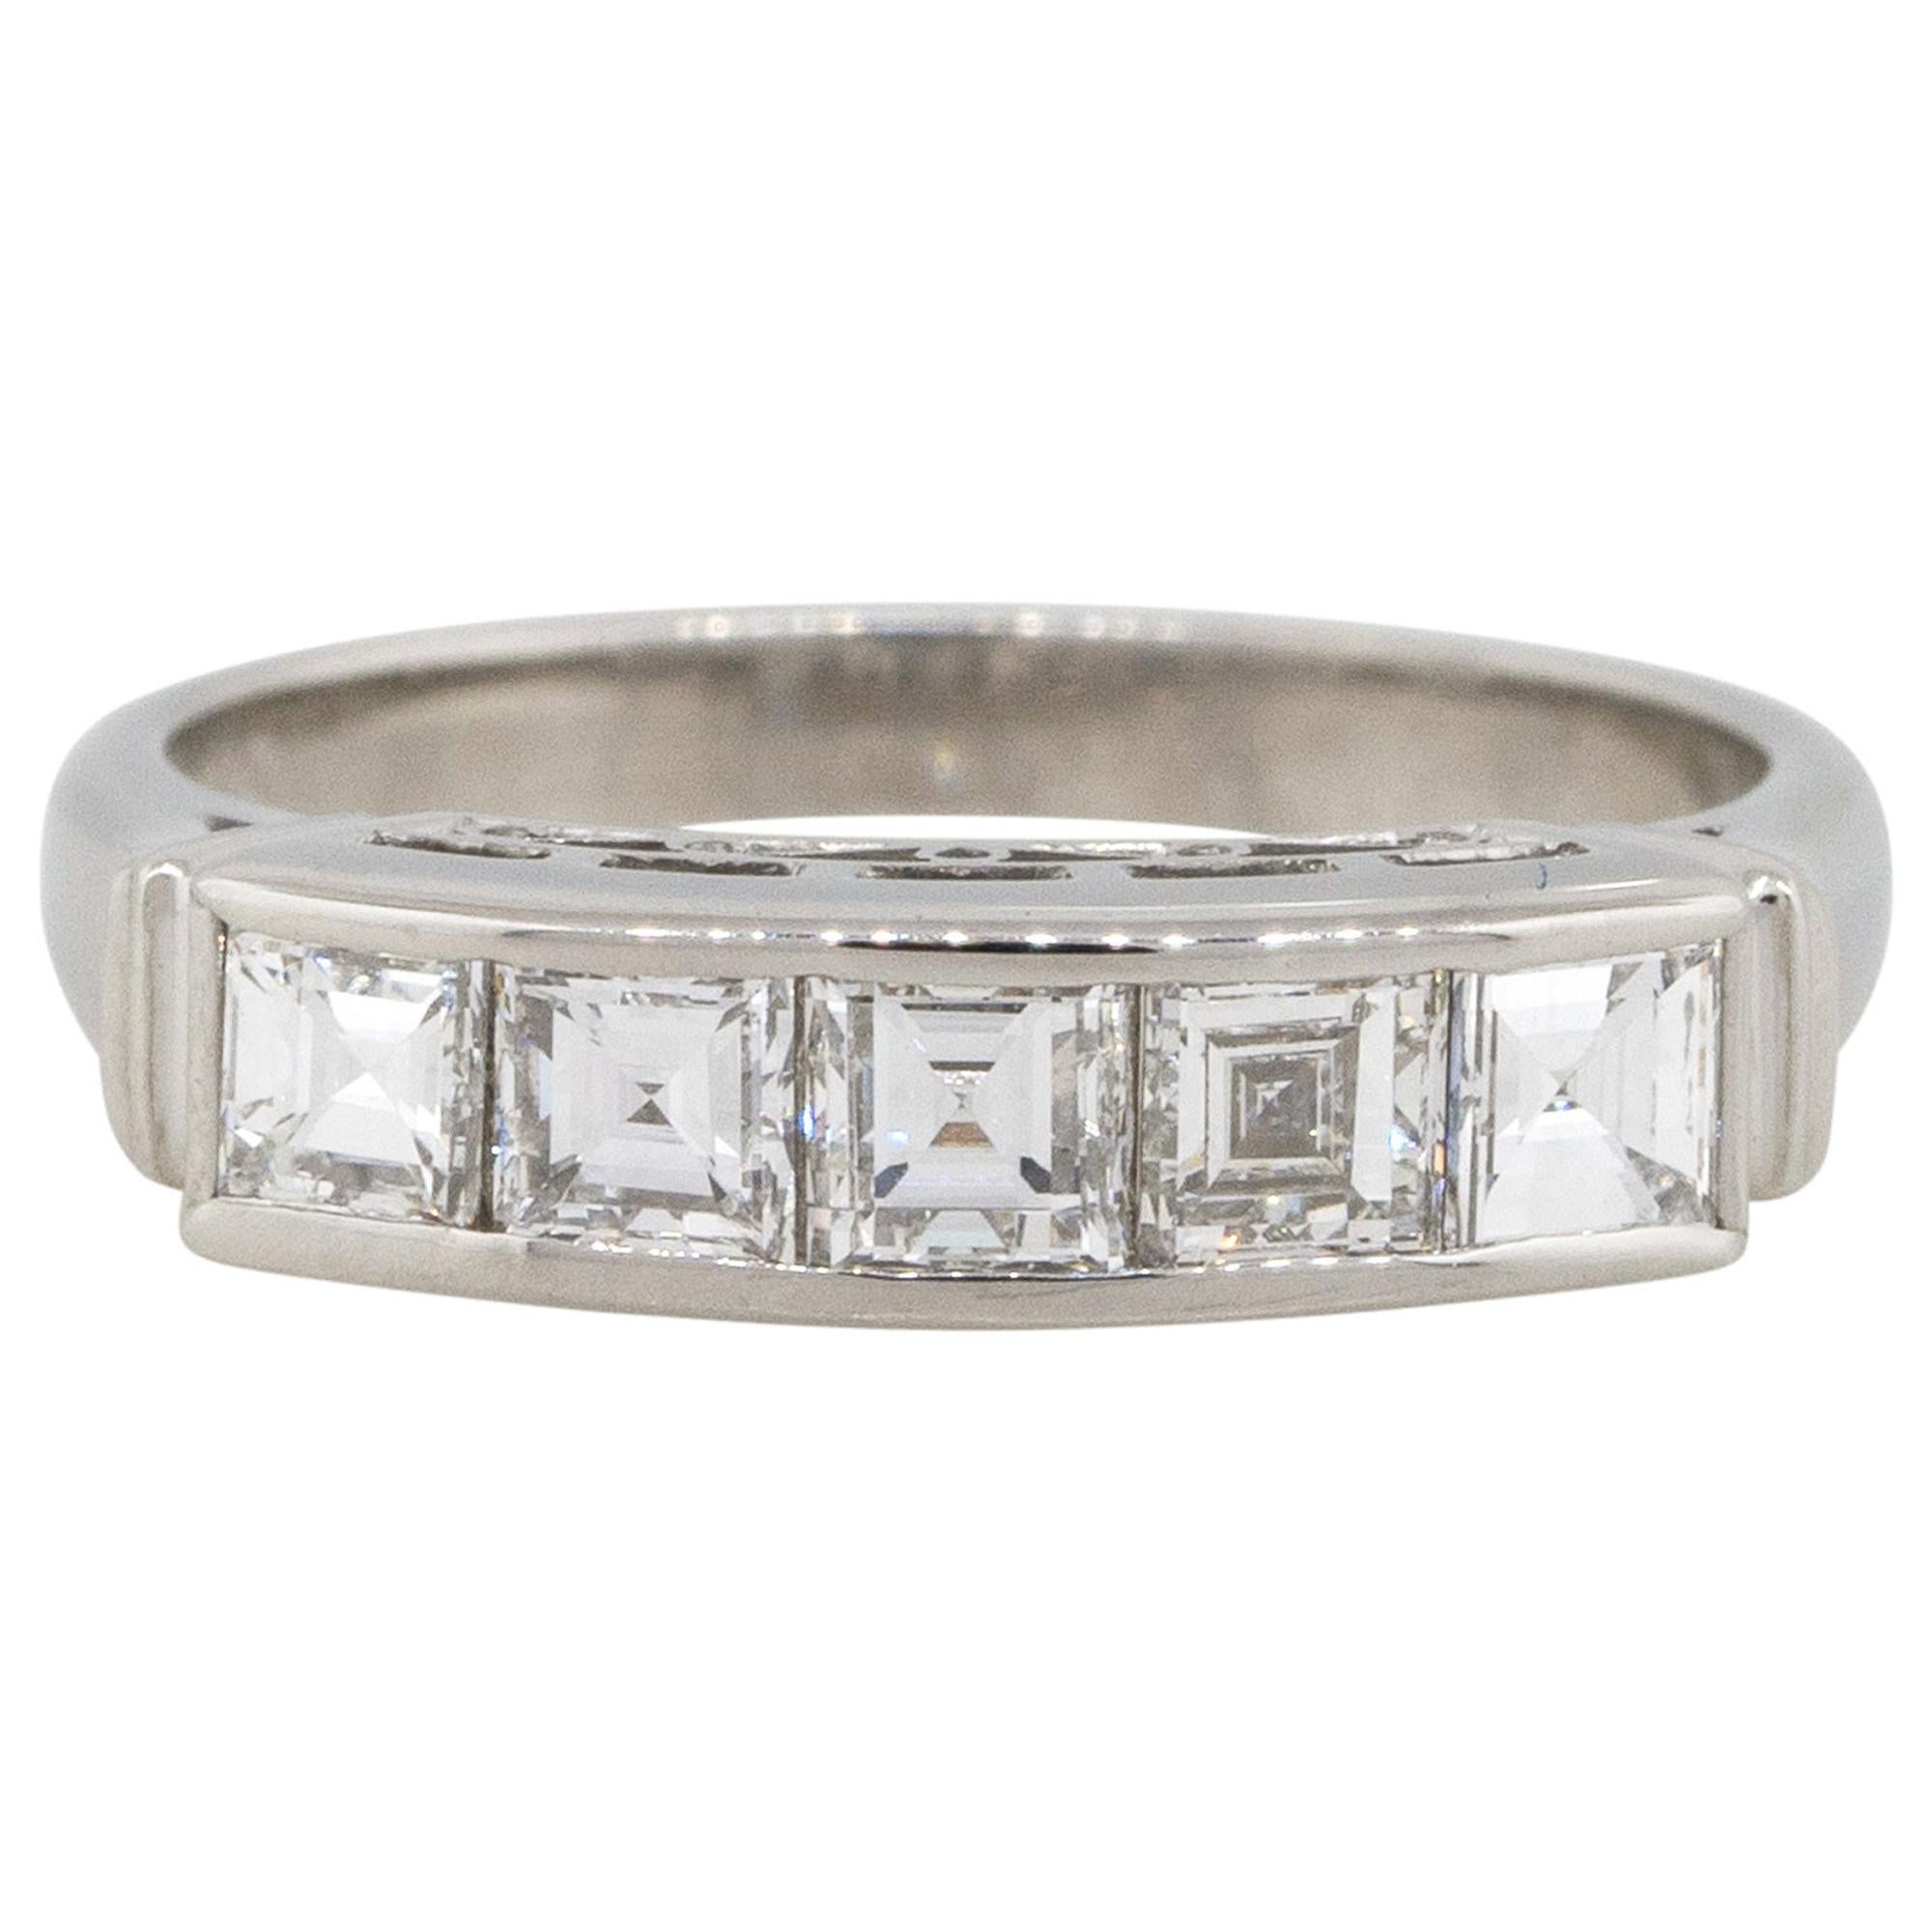 1.03 Carat Emerald Cut Diamond Five-Stone Ring Platinum in Stock